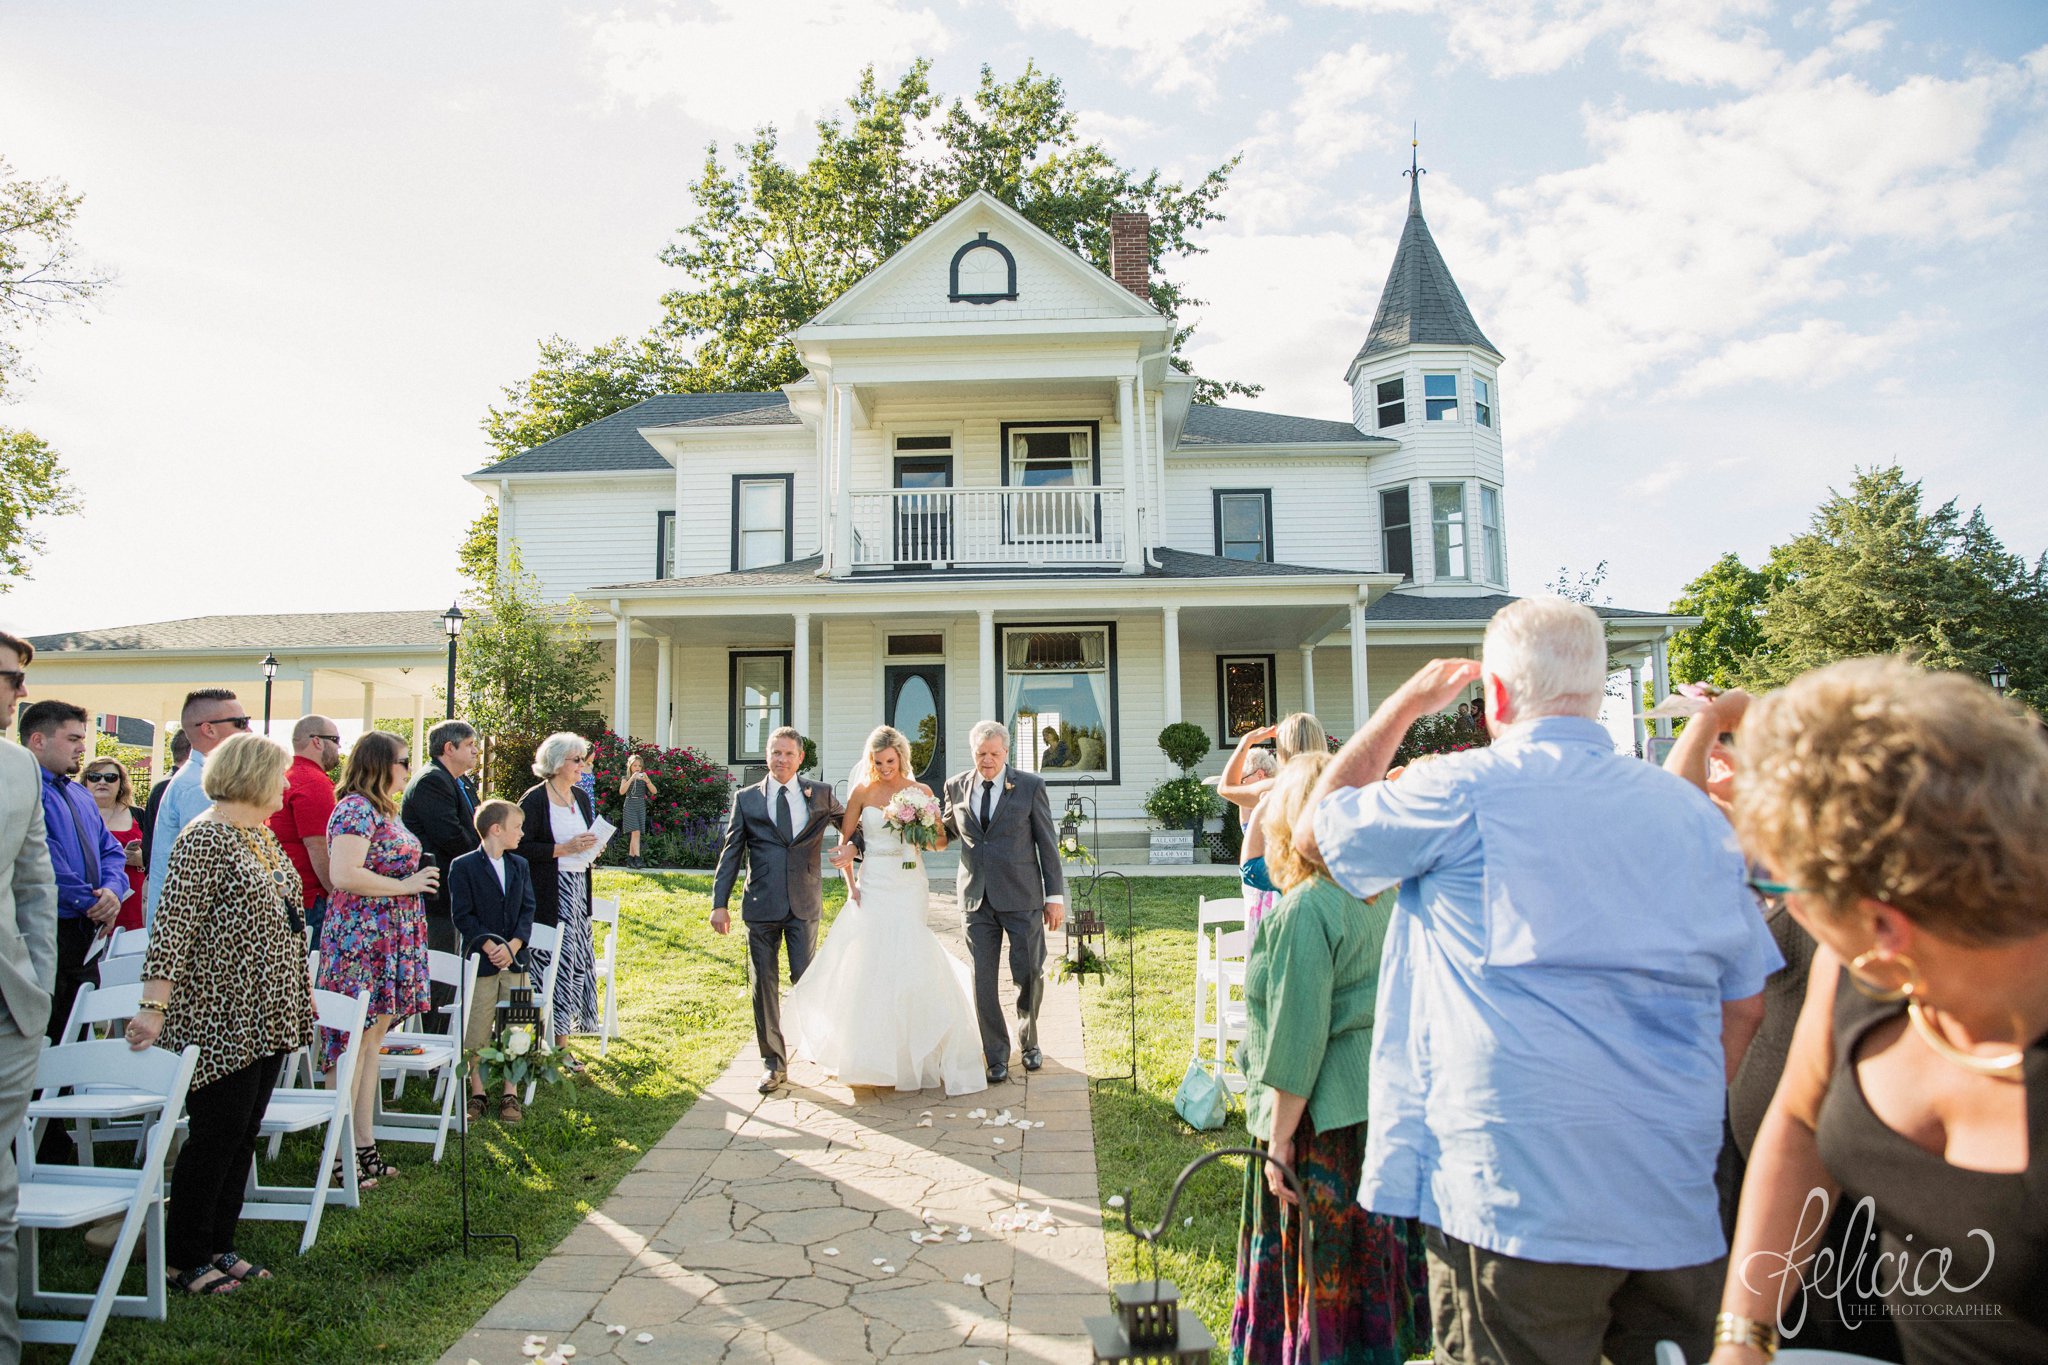 Outdoor Ceremony | Bride Coming down the aisle | Eighteen Ninety | Kansas City Wedding Venue | Felicia The Photographer